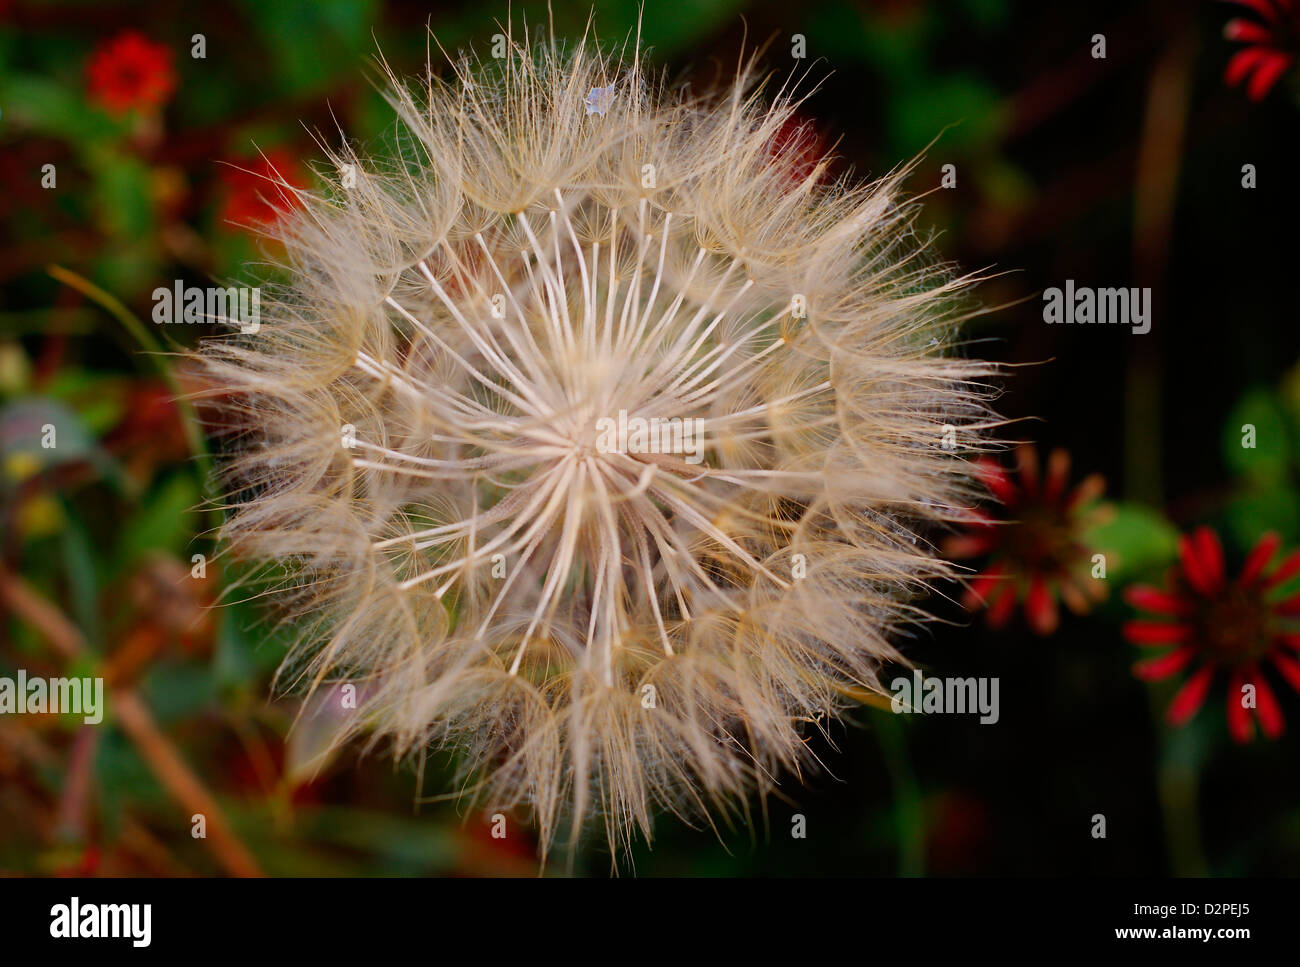 Seed Globe Closeup: Salsify - Tragopogon porrifolius, (Sunflower Family, Asteraceae). Central Europe (Native). Stock Photo